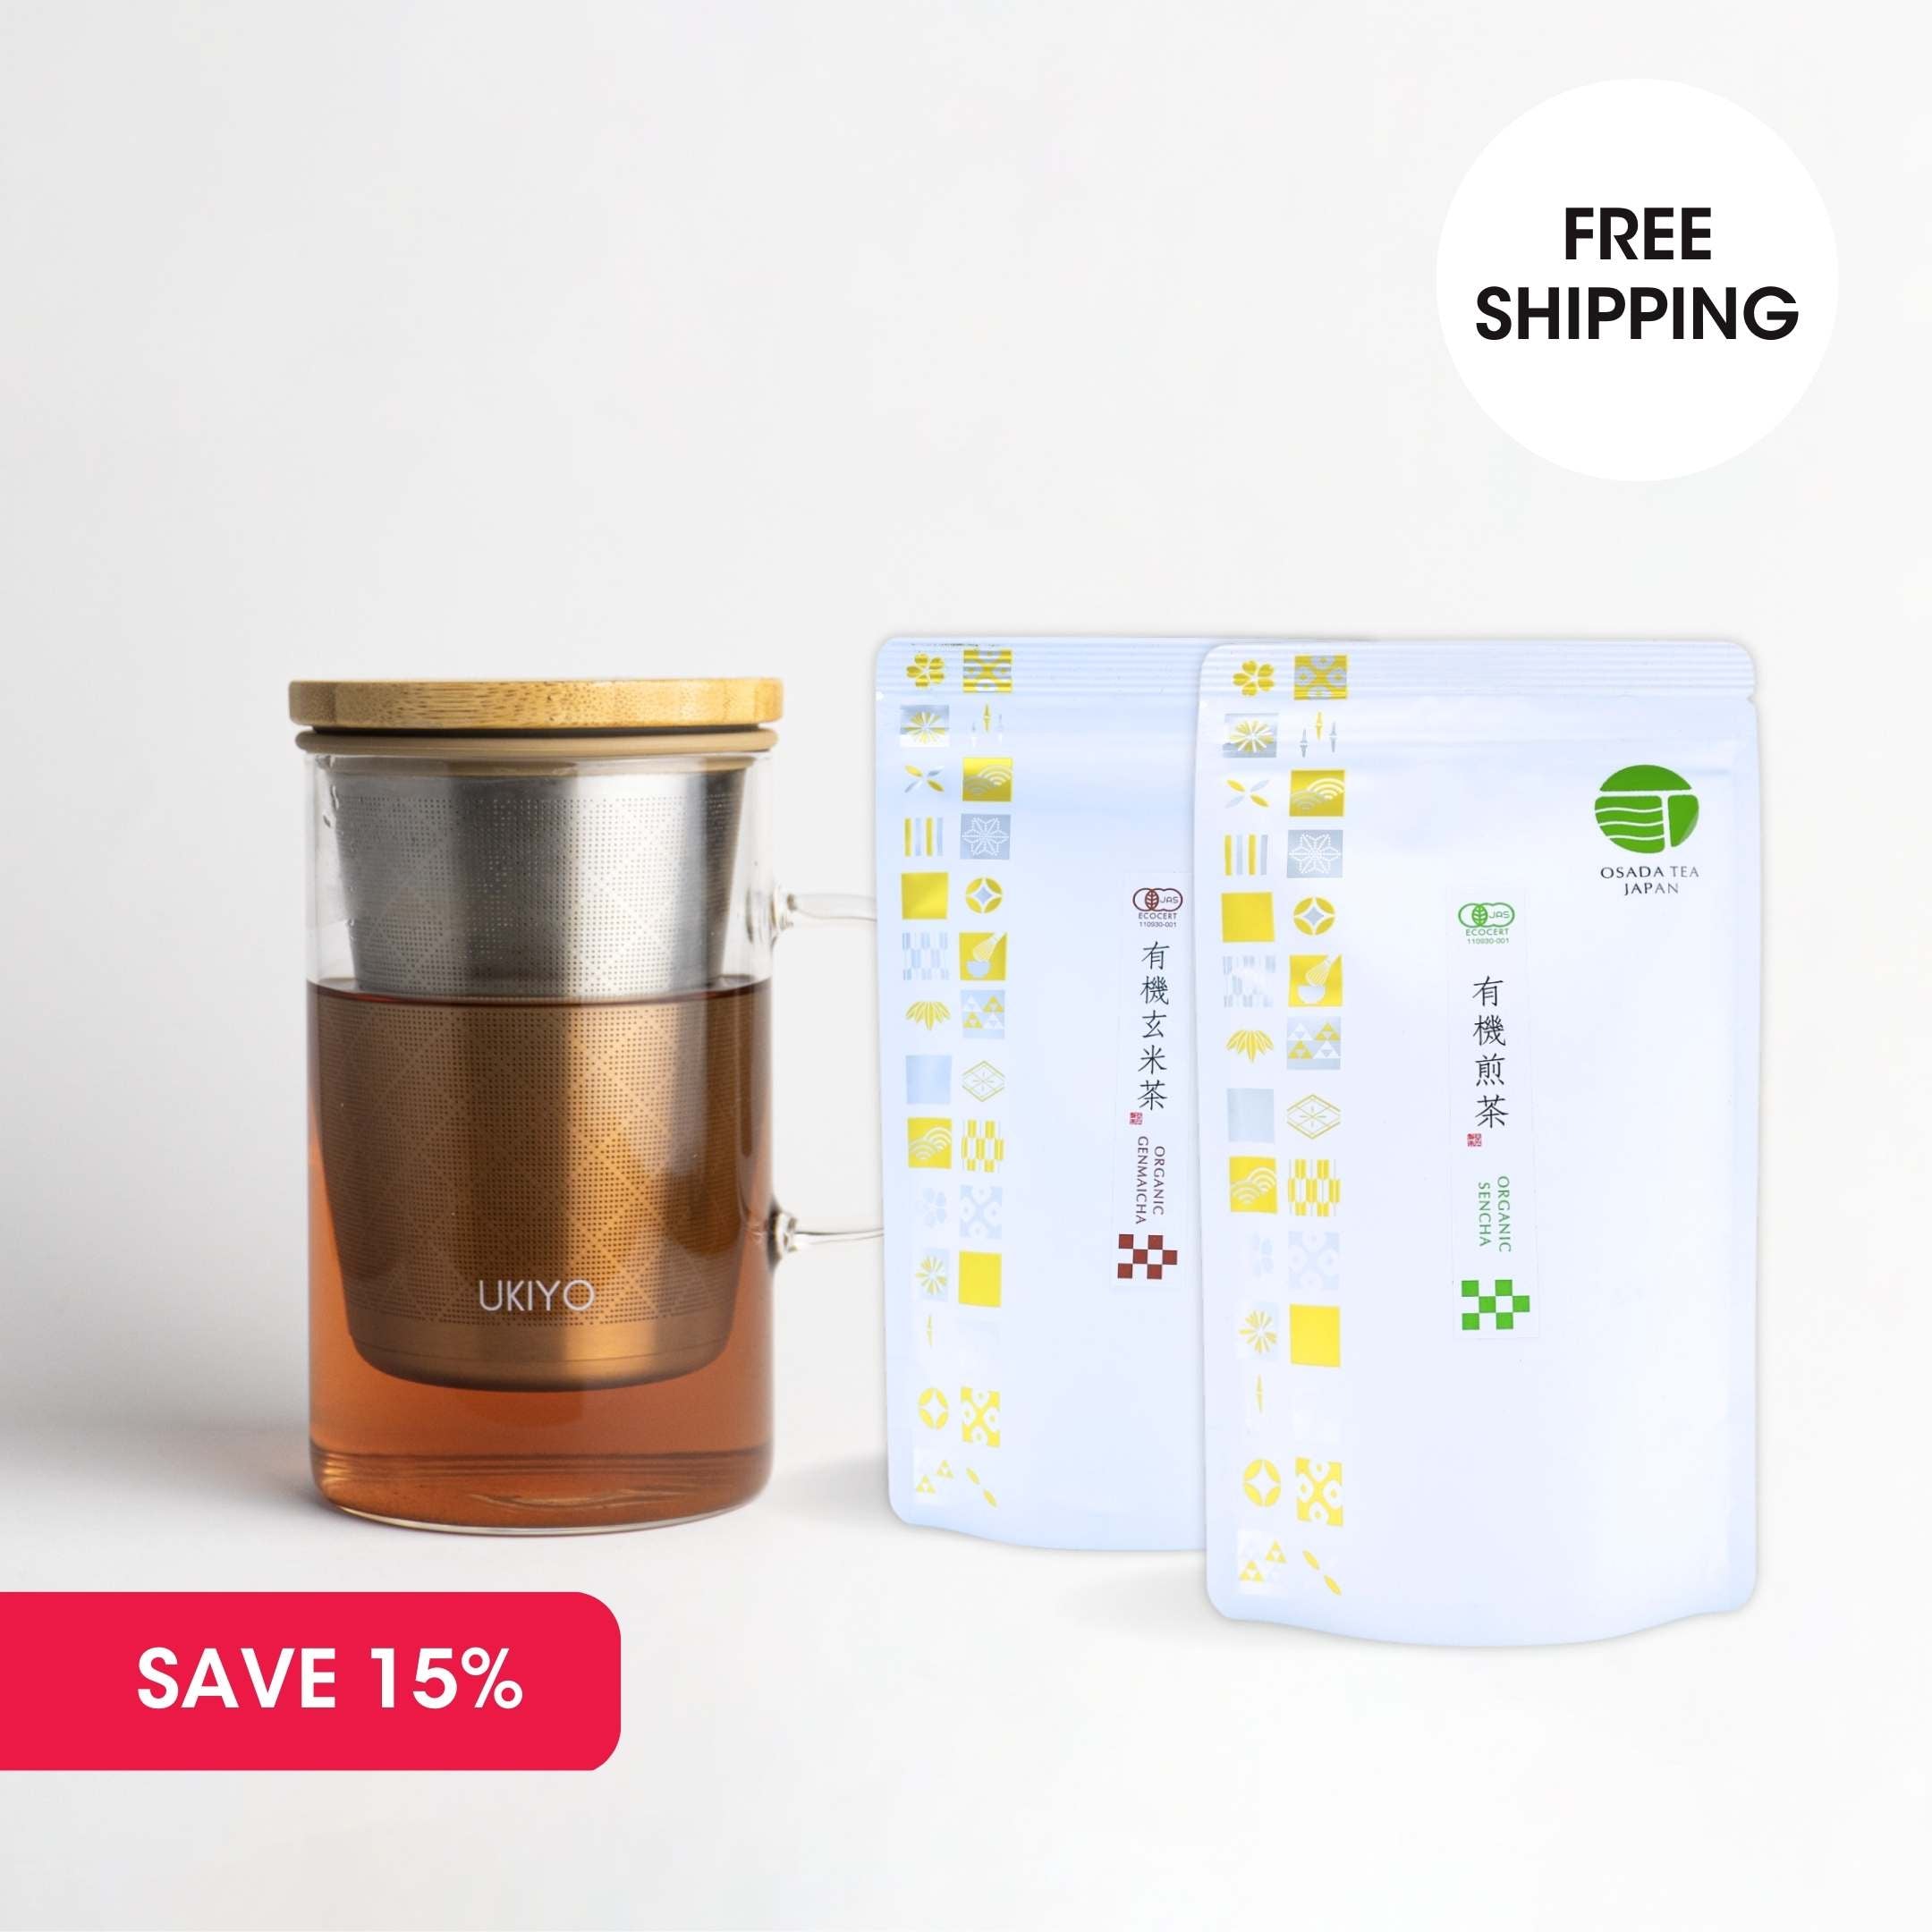 Premium Pairing Pack - Ukiyo Wood & 2 Organic Japanese Teas